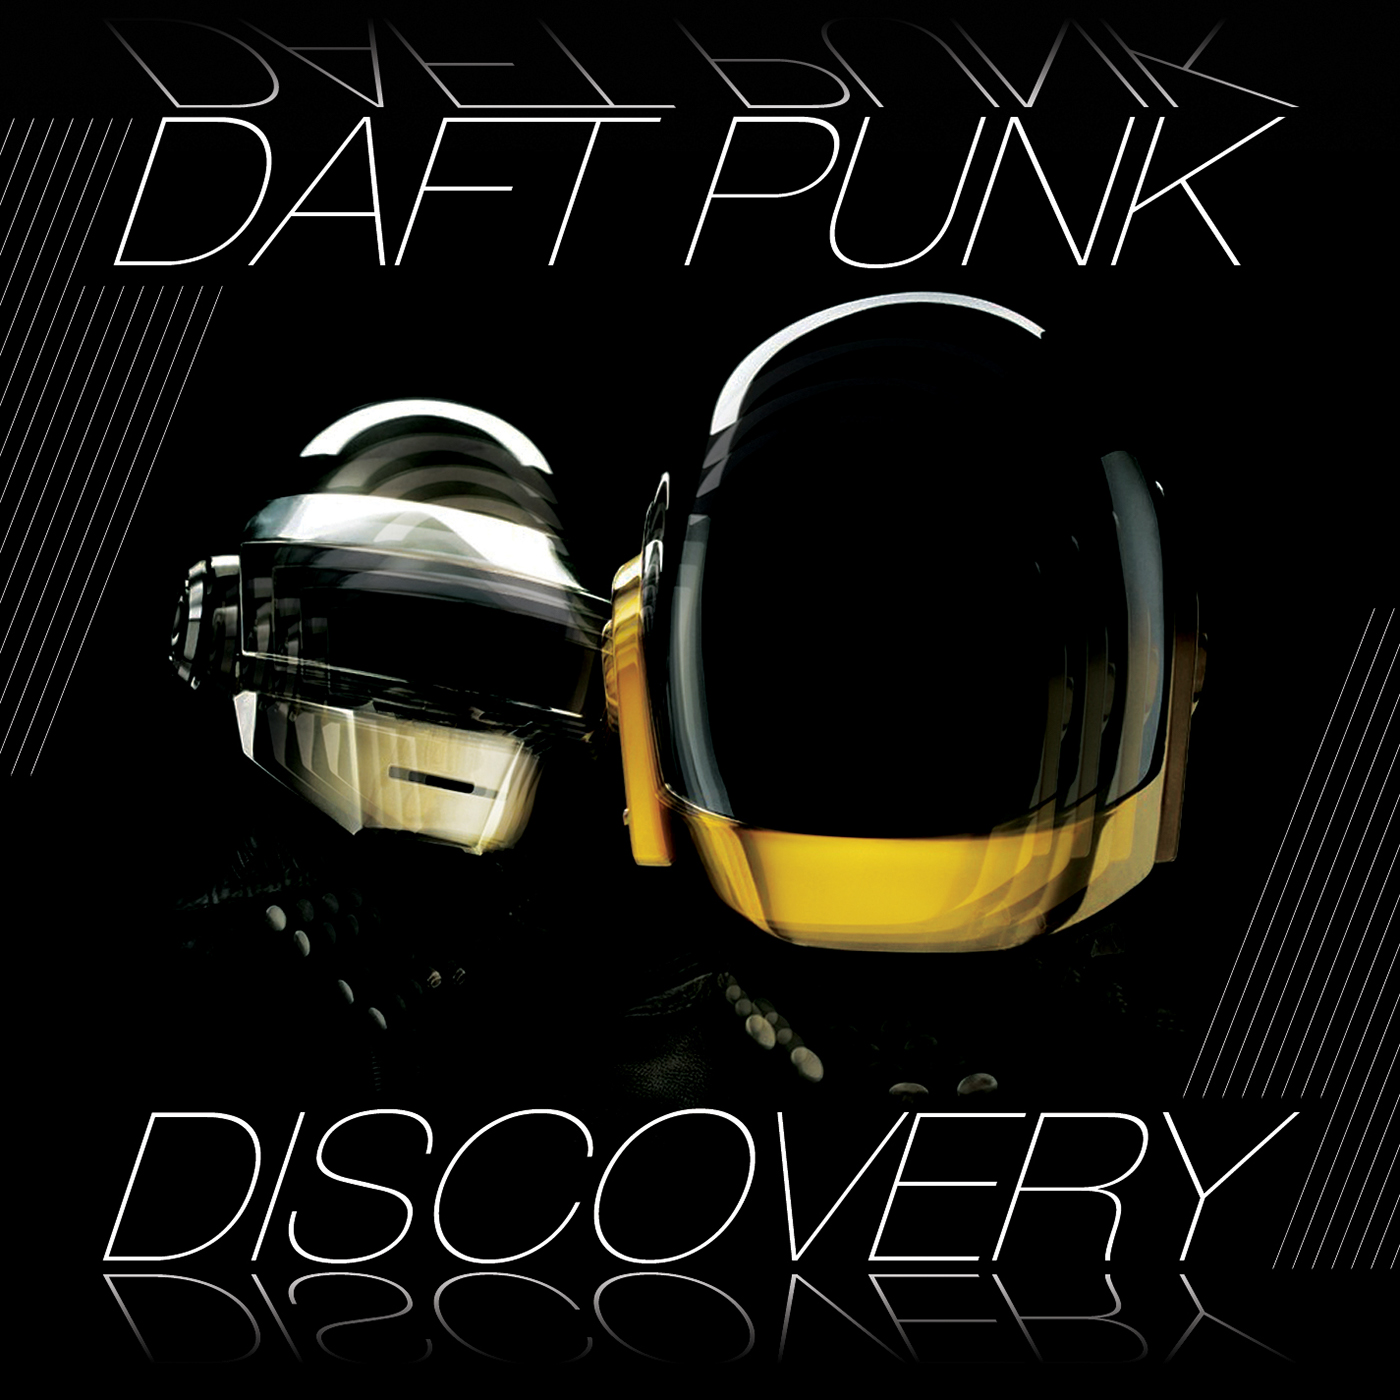 Daft Punk Album Covers / Digital Imaging / FIDM on Behance